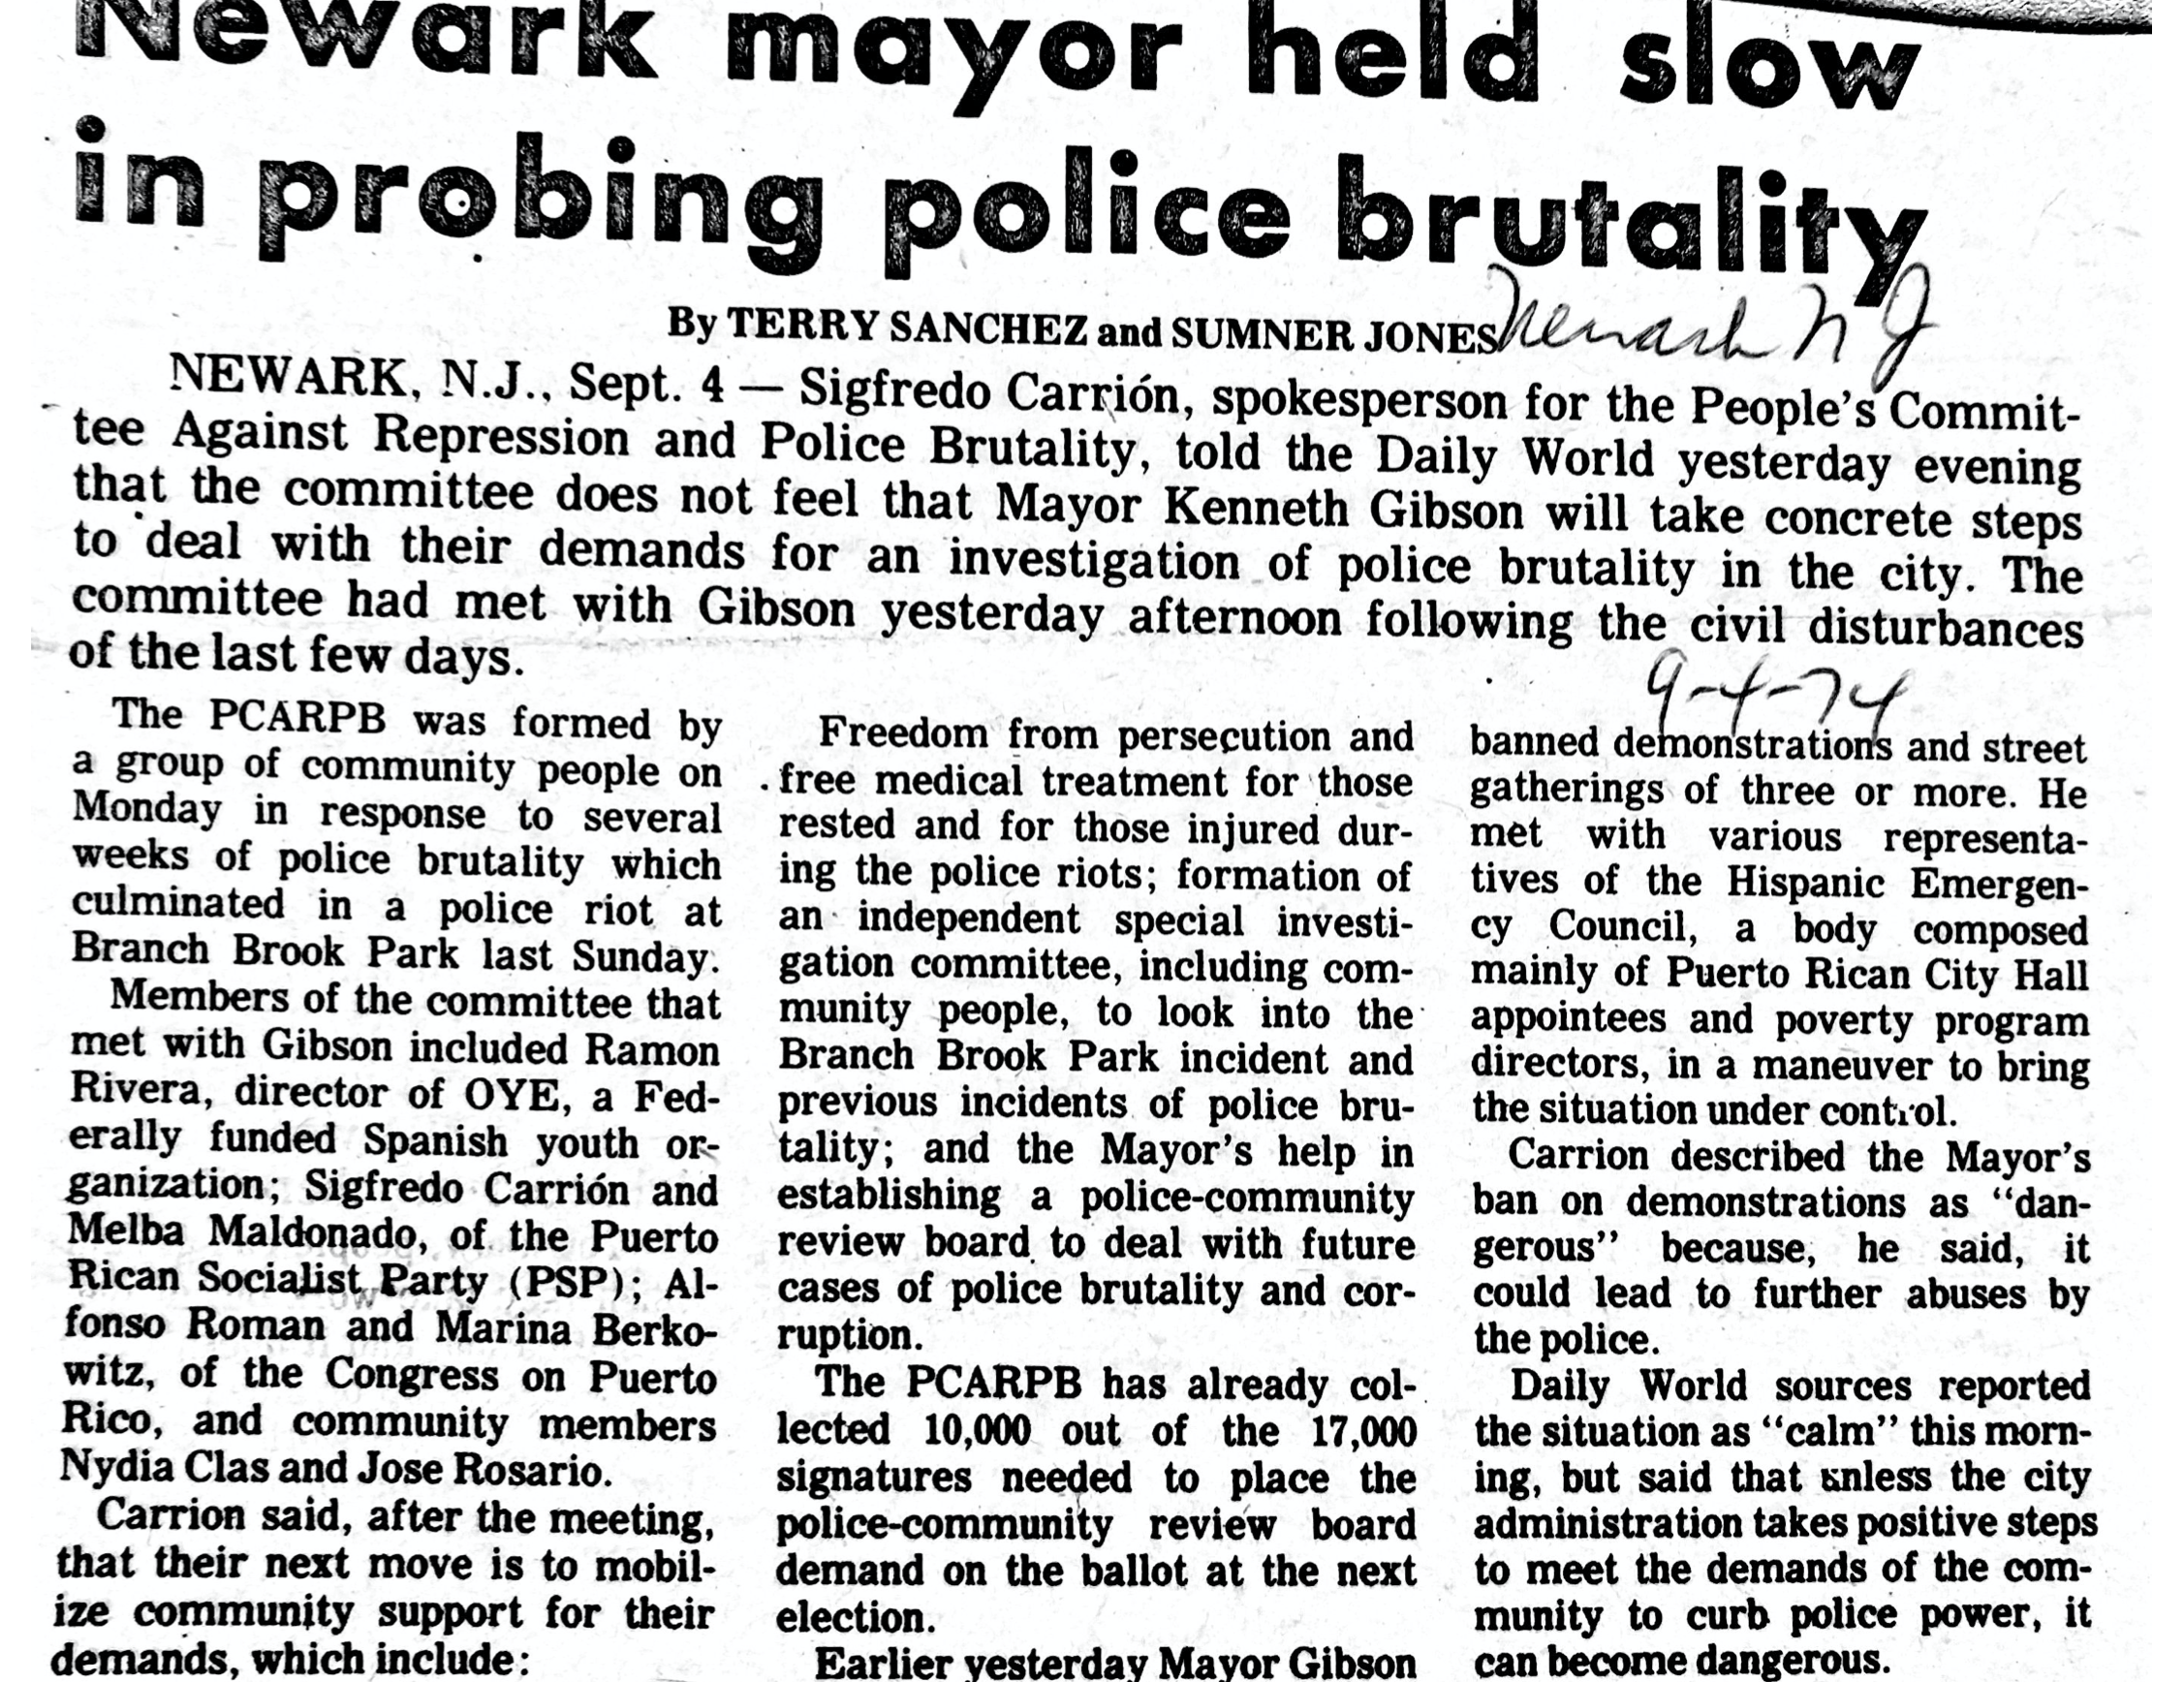 Article on PCAPBR (1974)